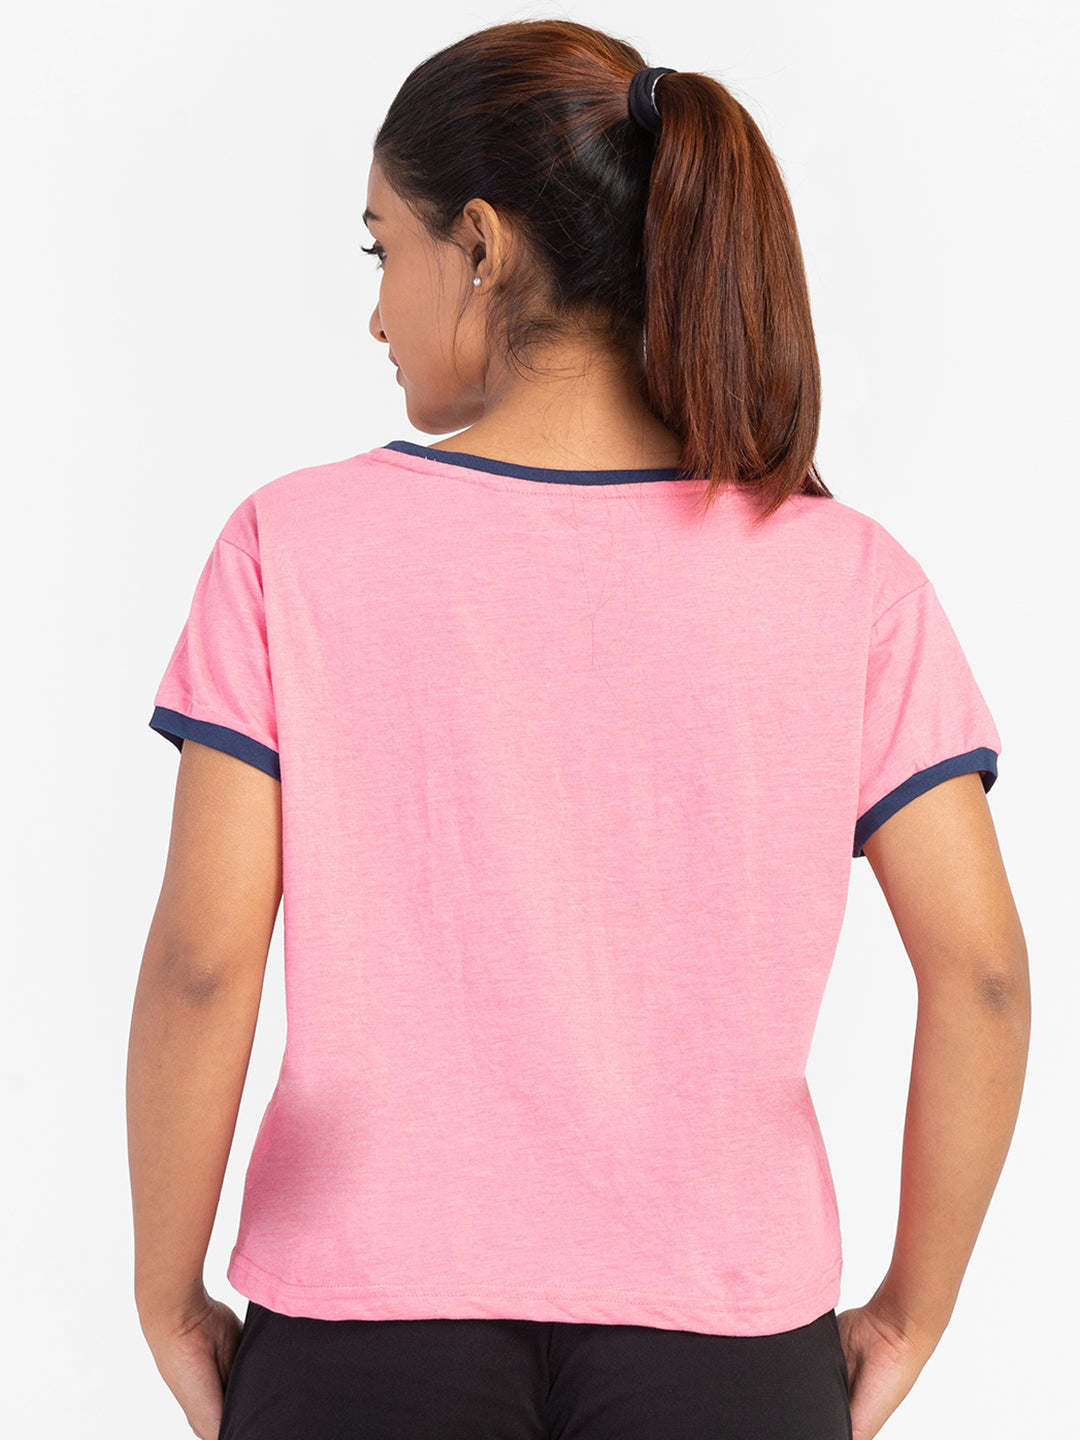 Globus Pink Printed Regular Fit Sports Tshirt